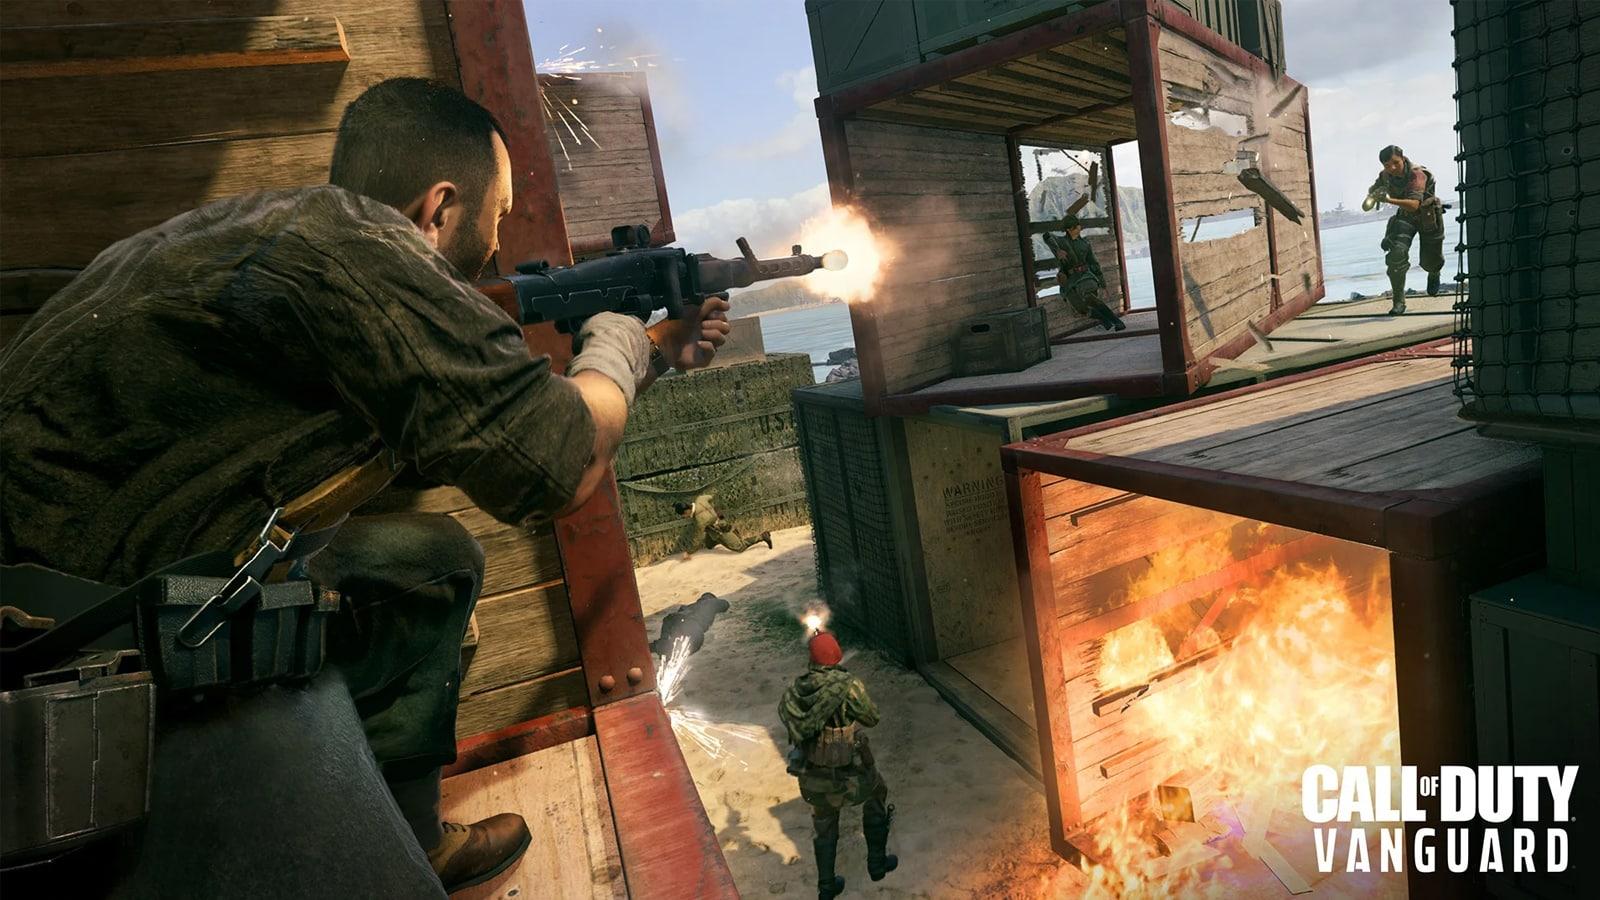 A screenshot of Shipment from Call of Duty: Vanguard.